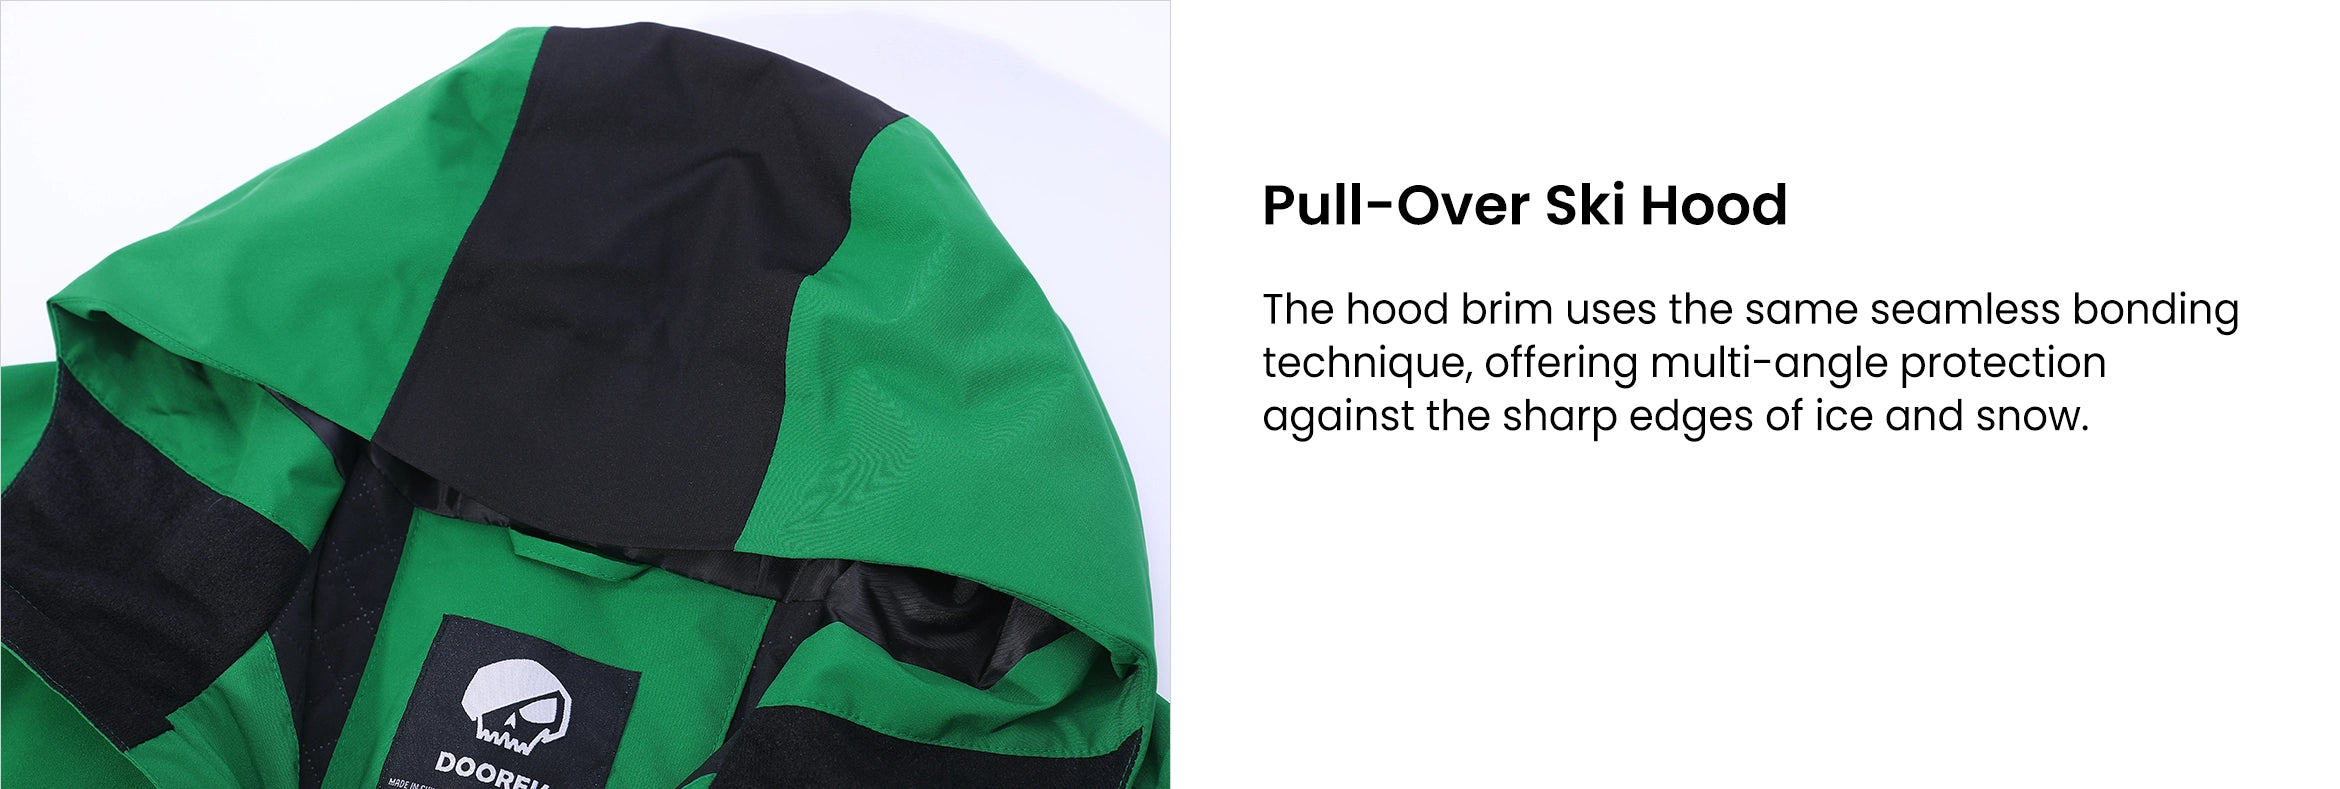 6. Pull-Over Ski Hood